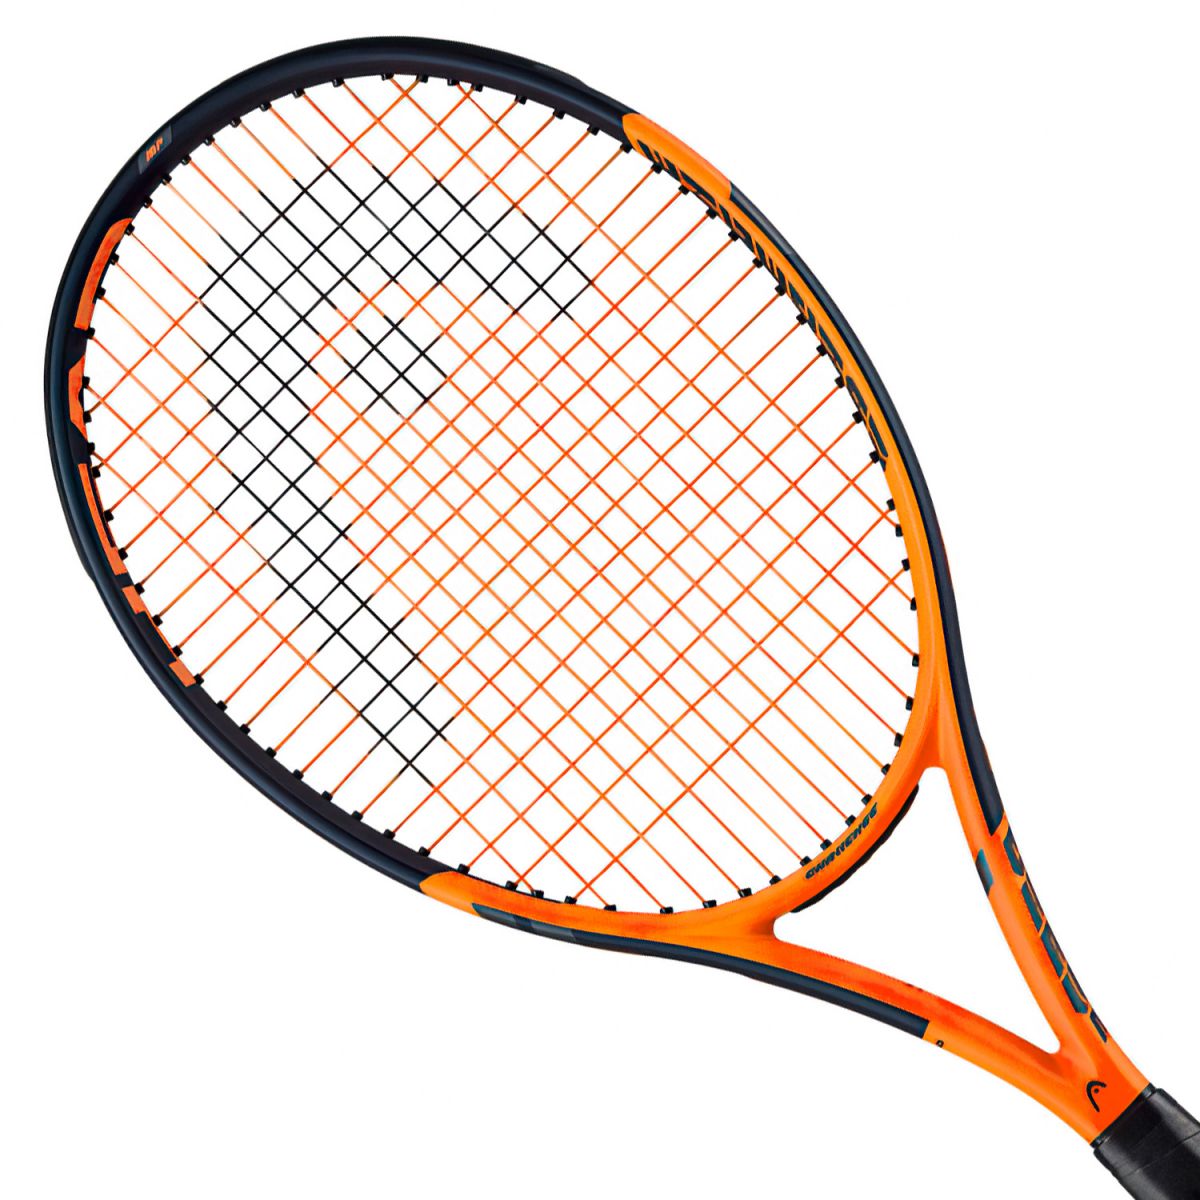 Vợt tennis Head IG Challenge MP Orange (270gr) chính hãng - 235513